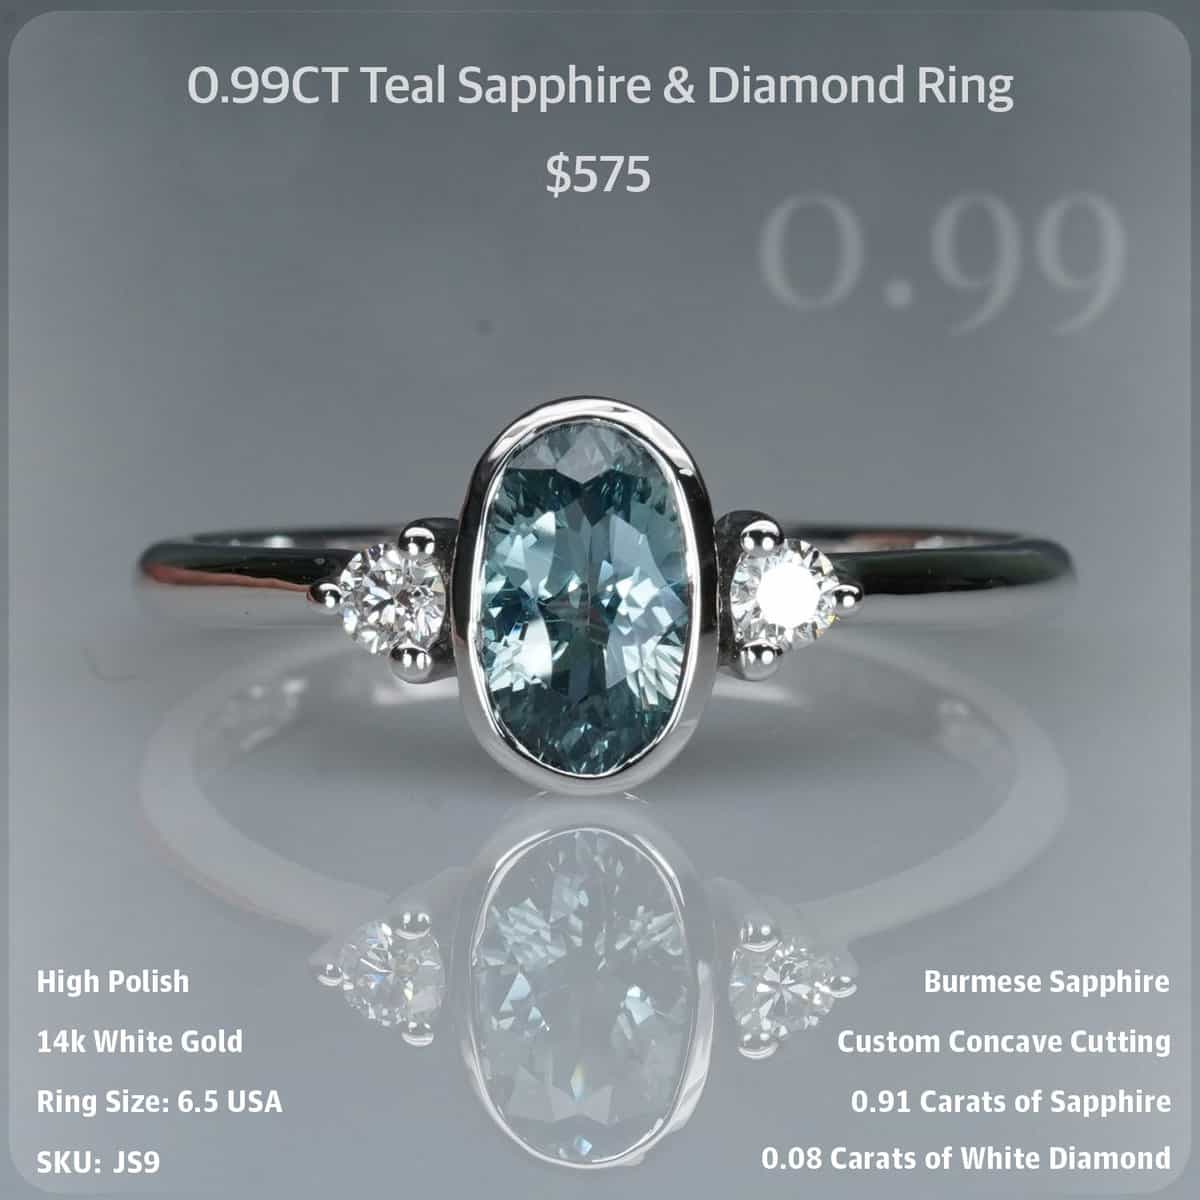 0.99CT Teal Sapphire & Diamond Ring